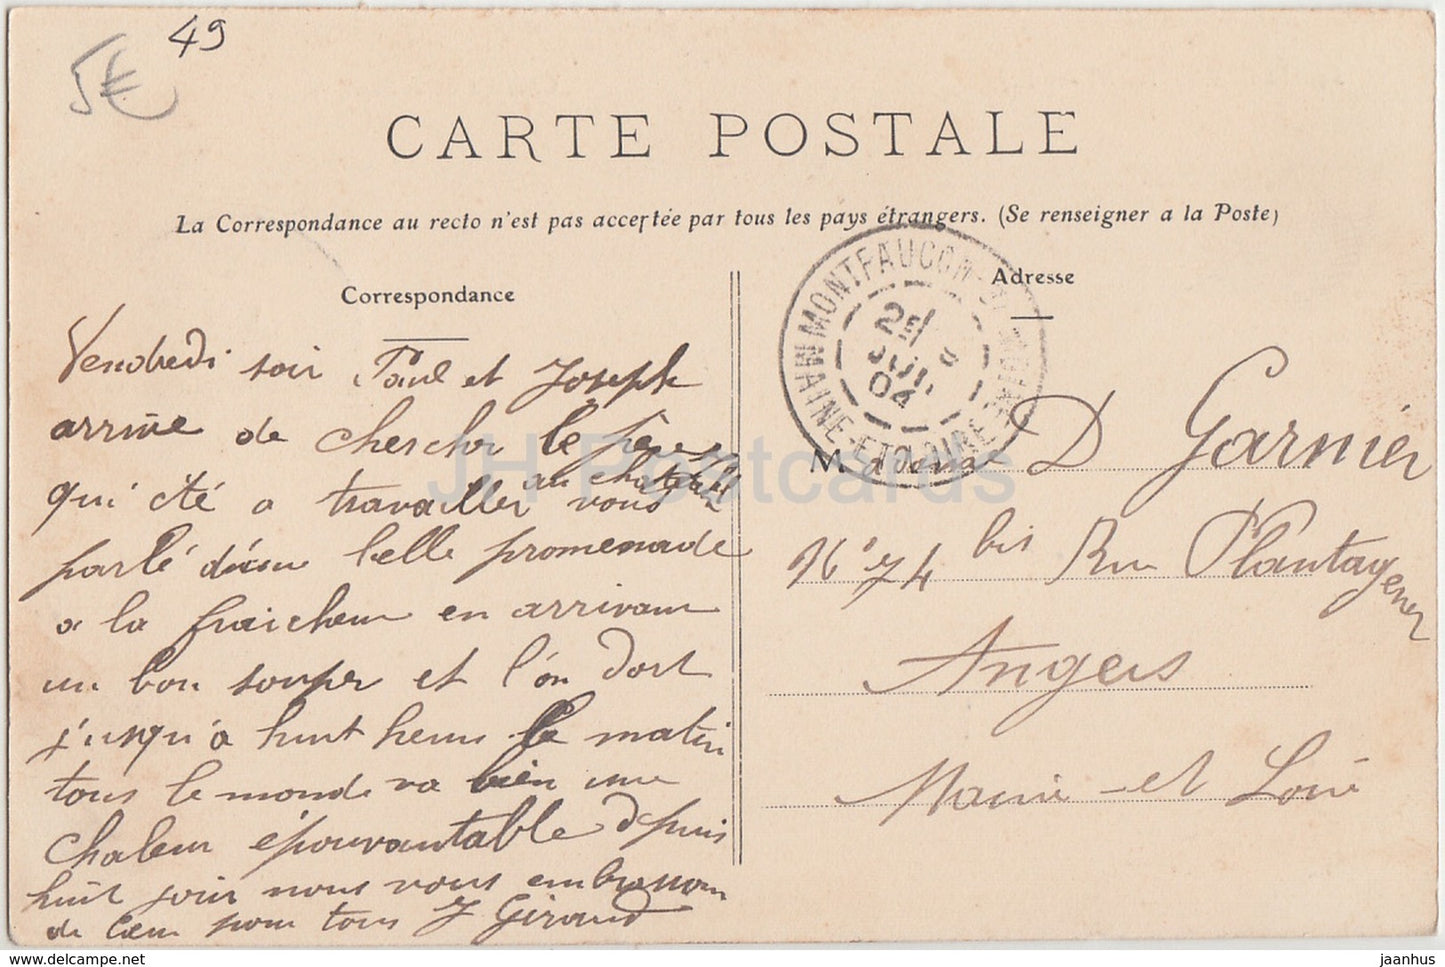 St. Crespin - Chateau de la Septière - Schloss - 54 - 1904 - alte Postkarte - Frankreich - gebraucht